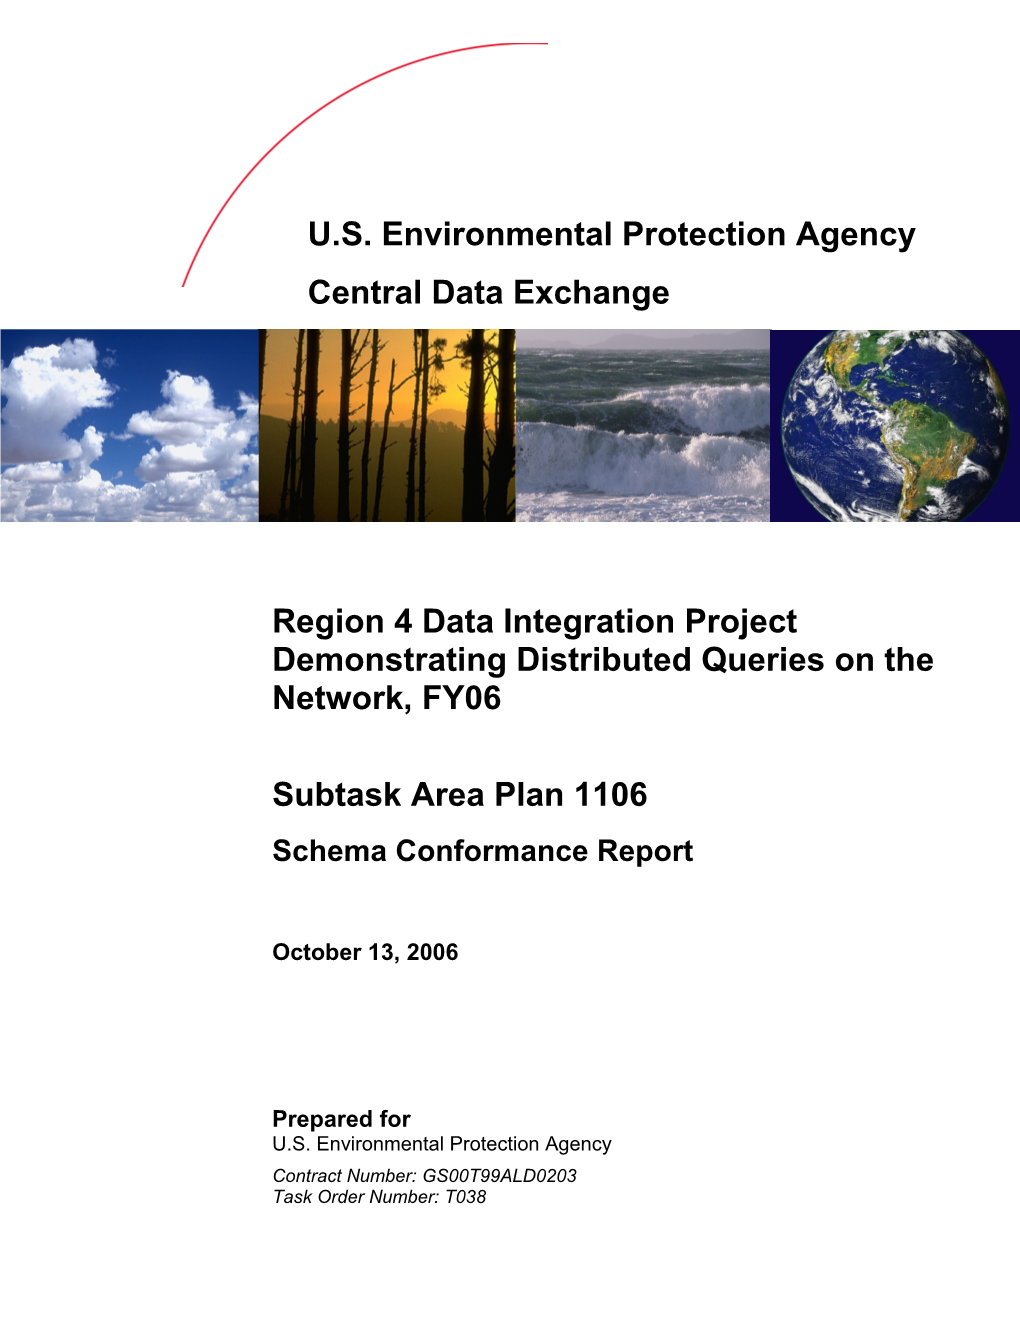 U.S. EPA CDX Region 4 Data Integration Project